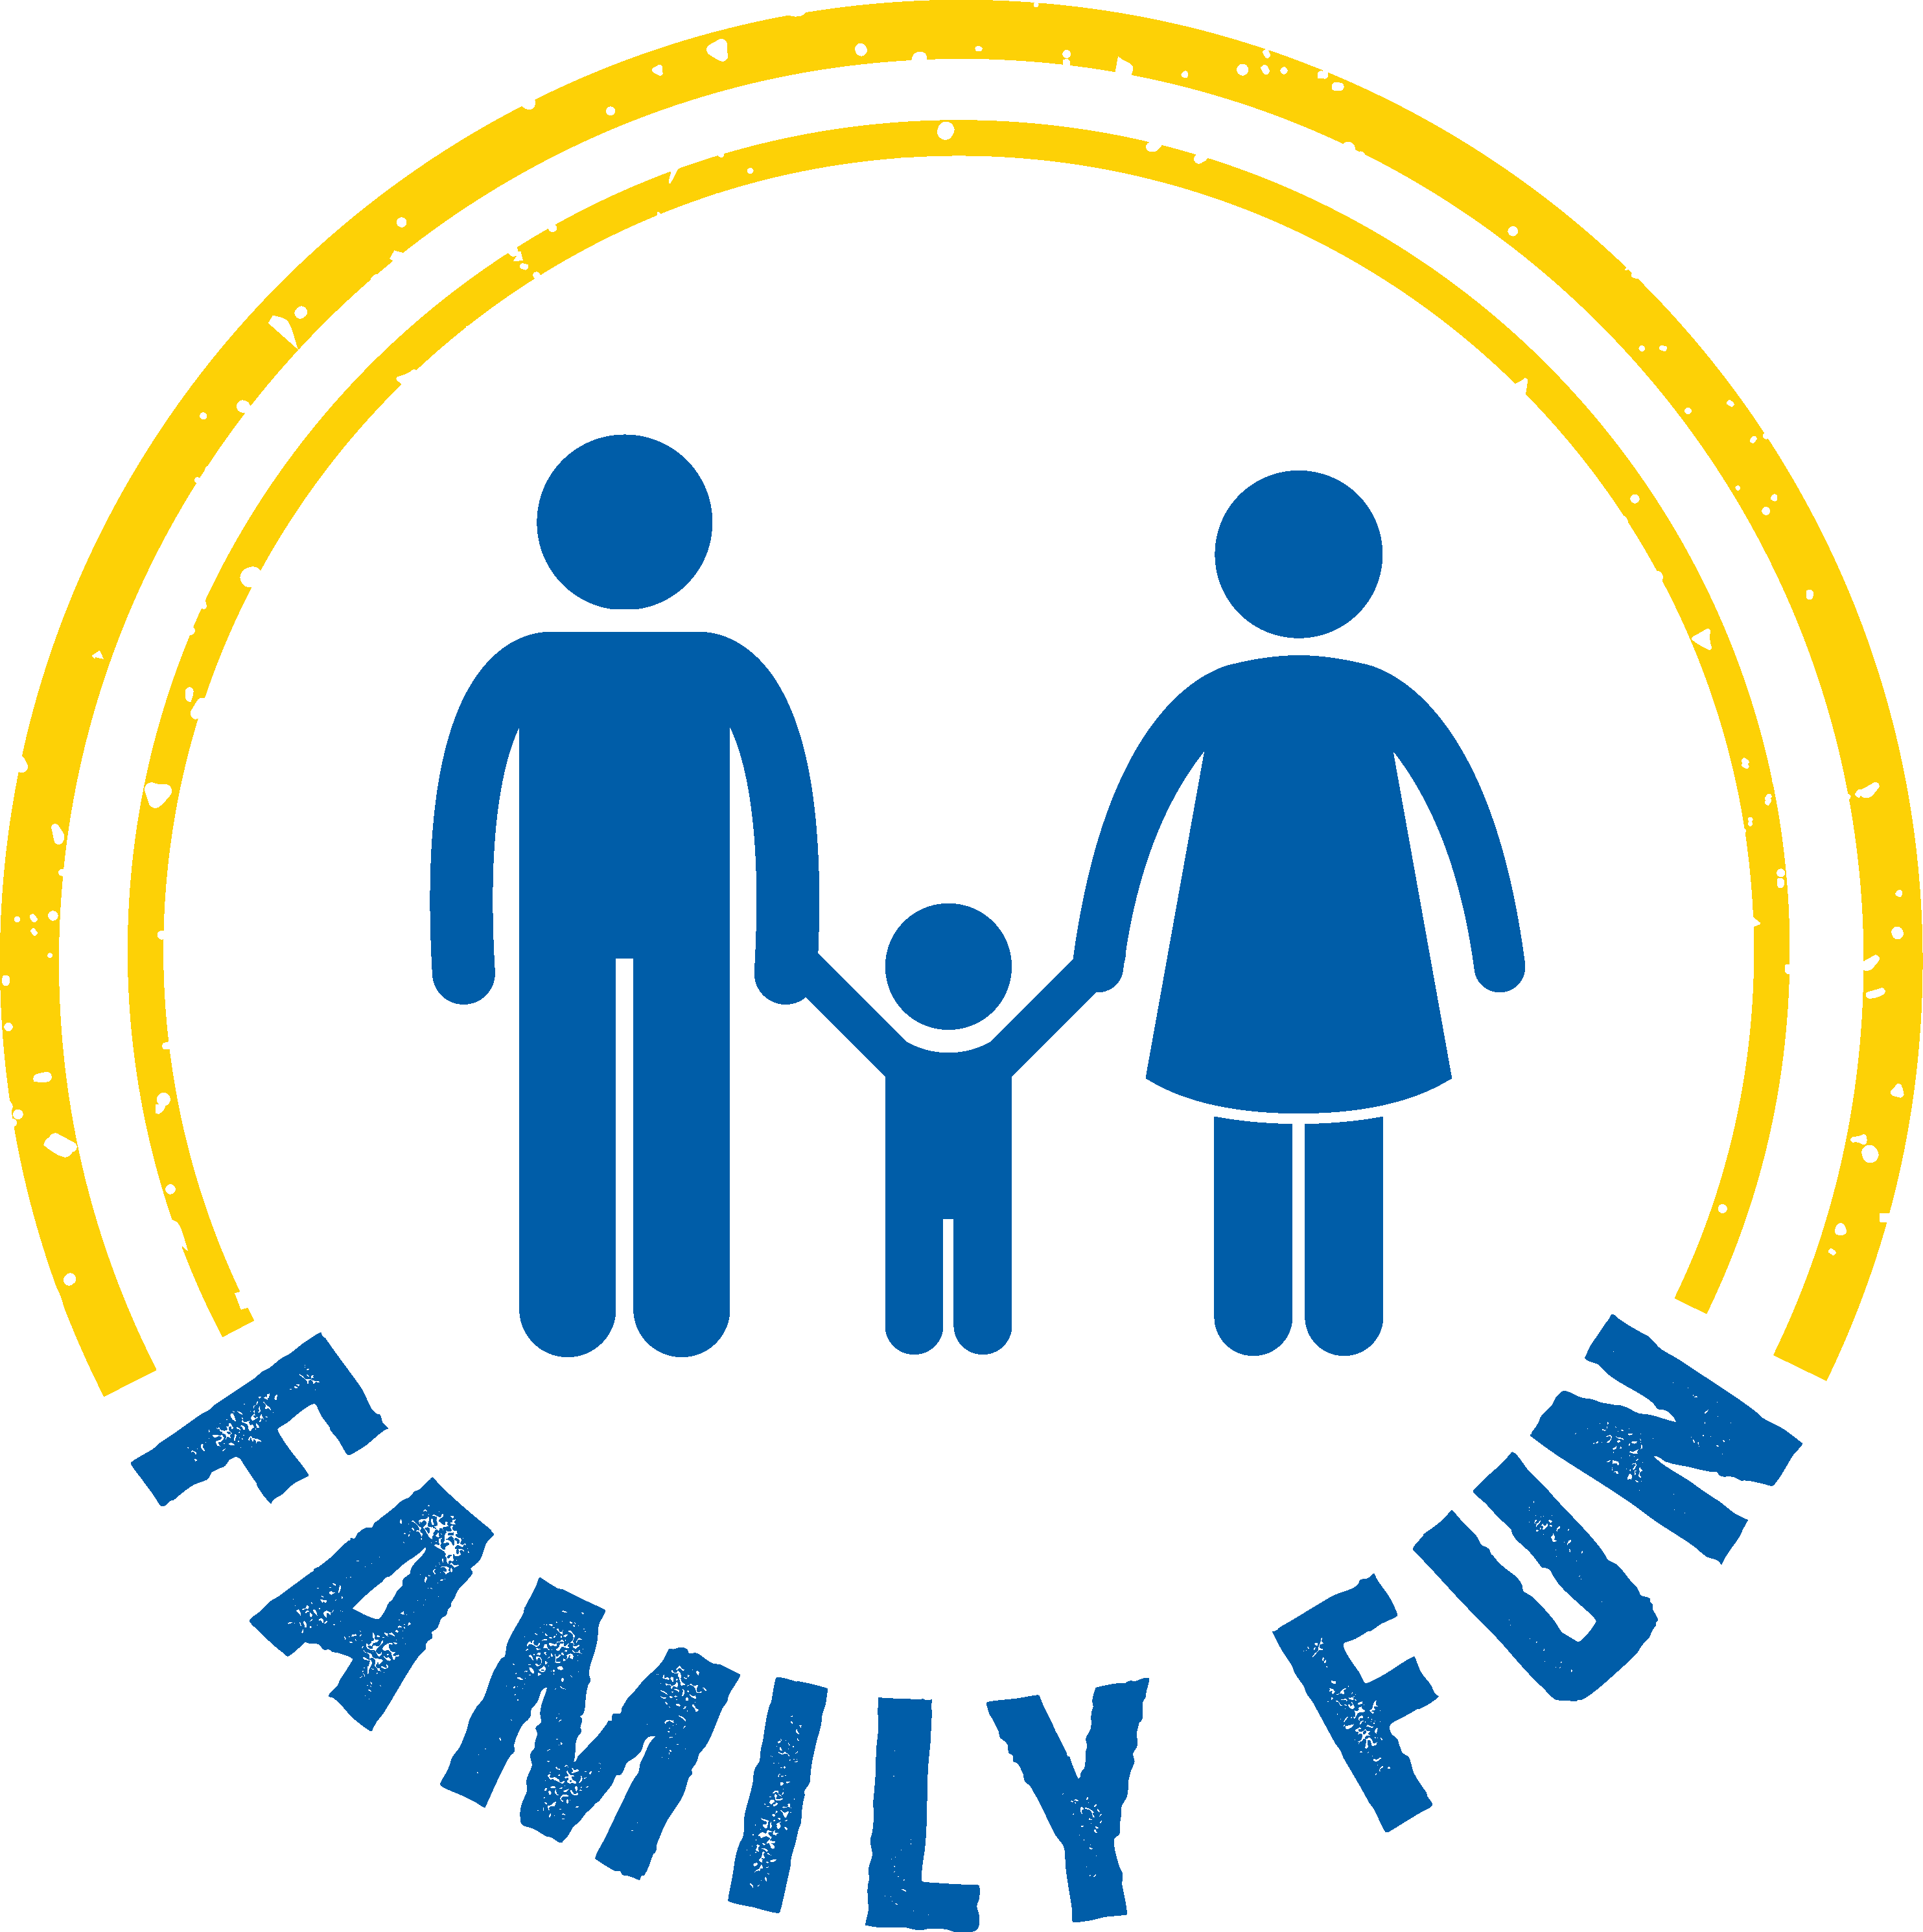 Family fun logo